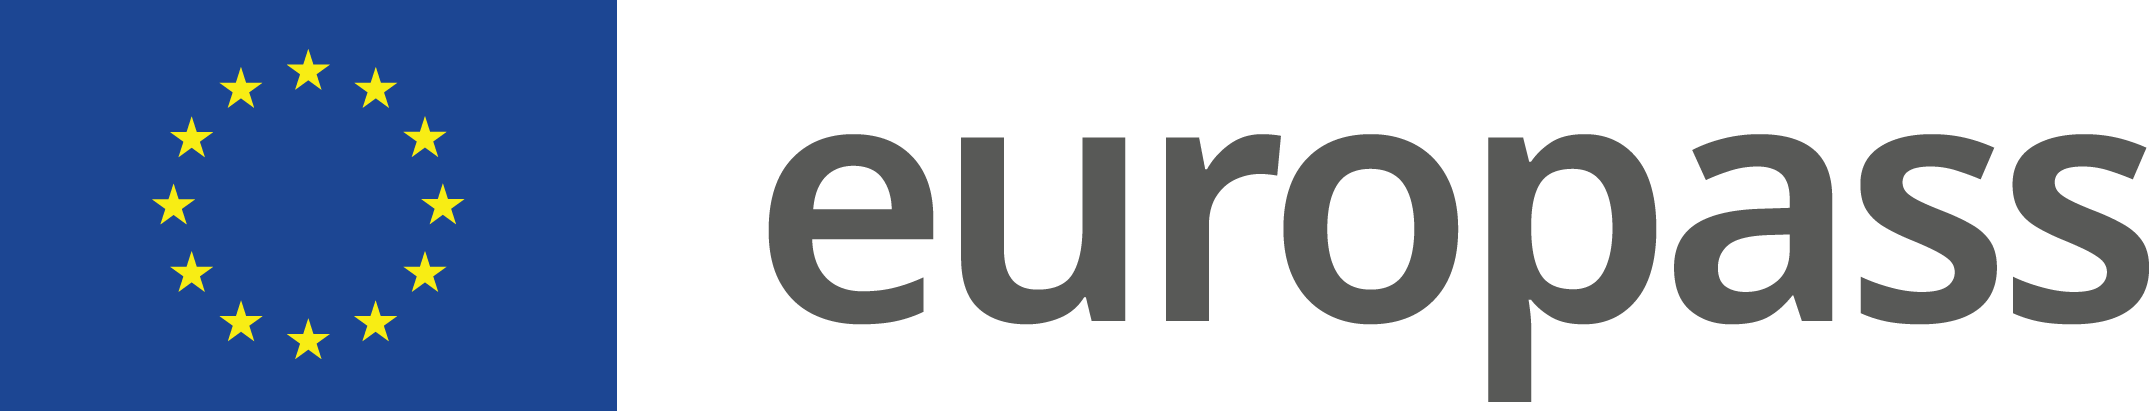 logo europass barevne 2020 RGB